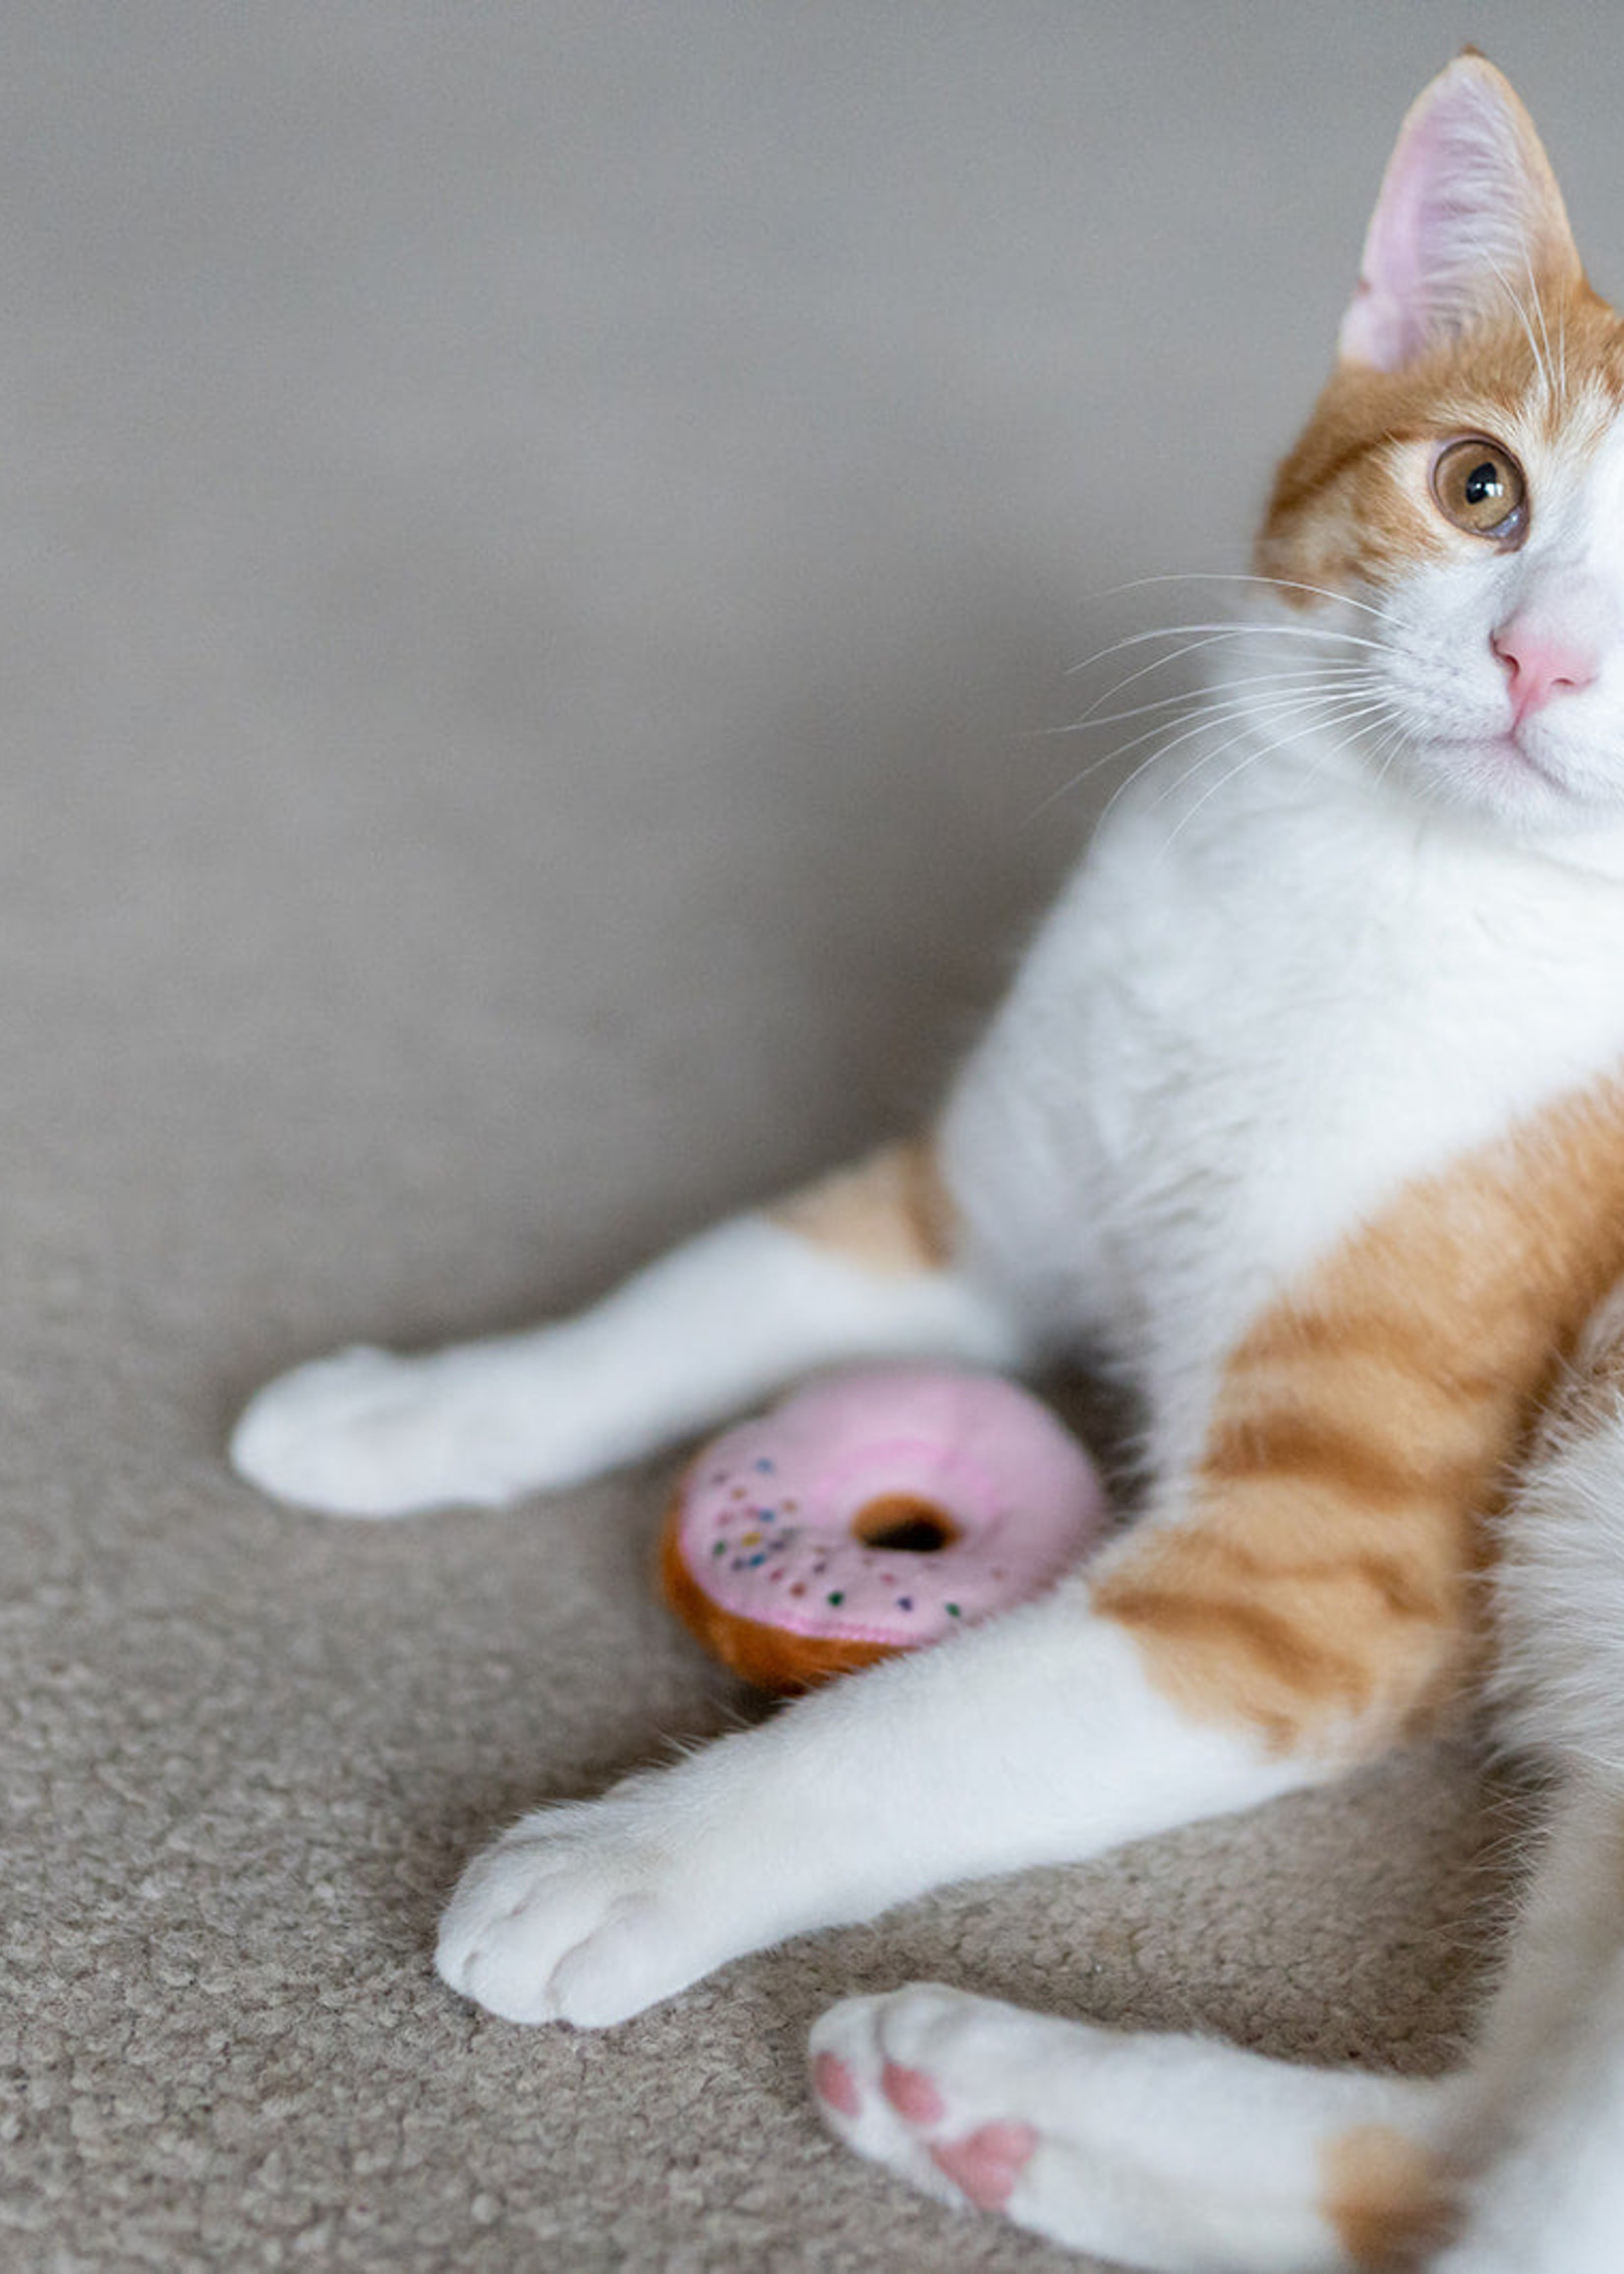 P.L.A.Y. Feline Frenzy Catnip Toy - Kitty Kreme Doughnuts